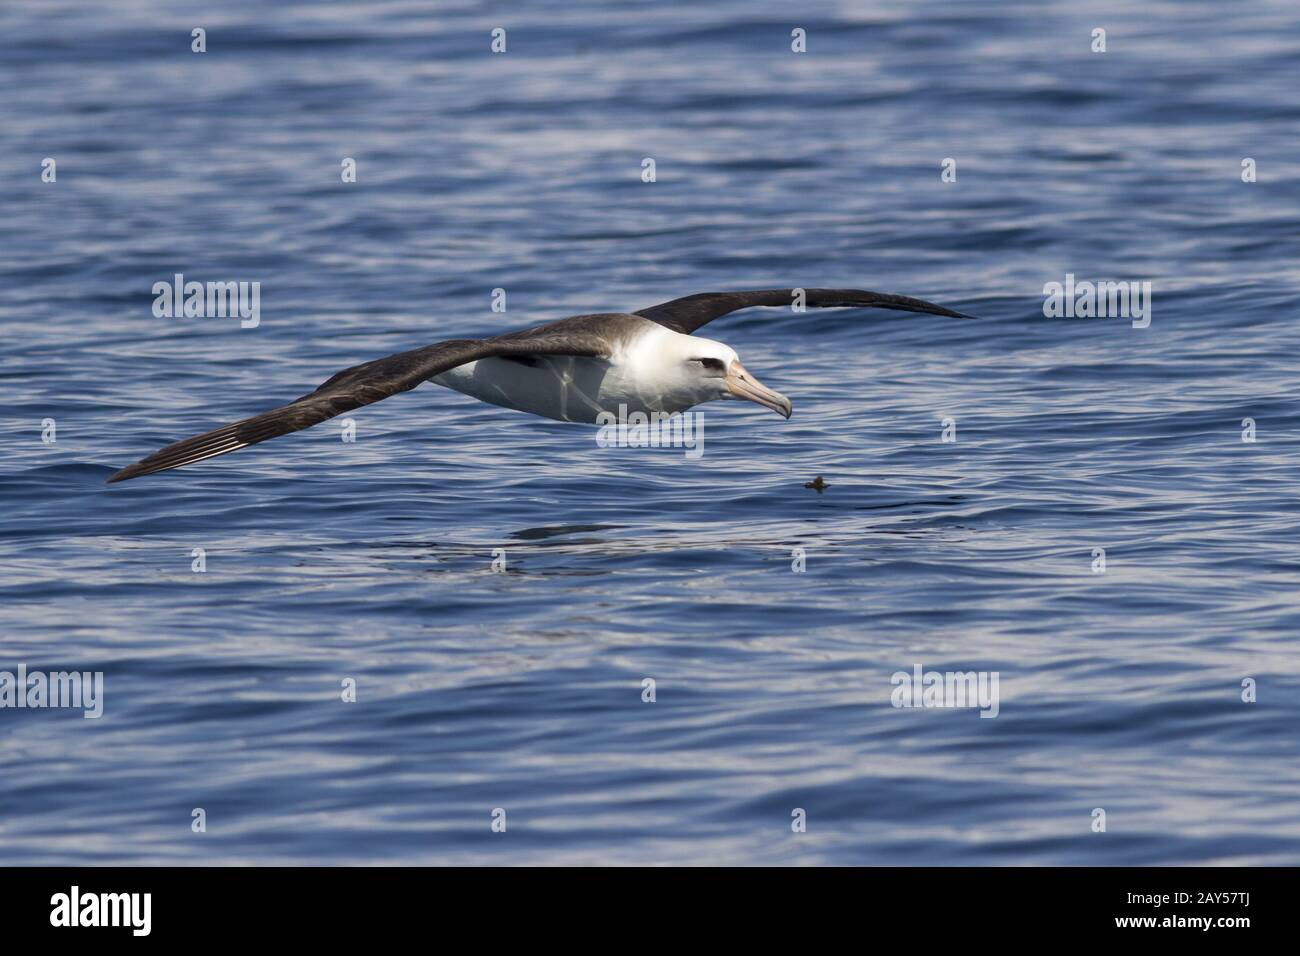 Laysan albatross that flies over the waters of the Ocean Stock Photo